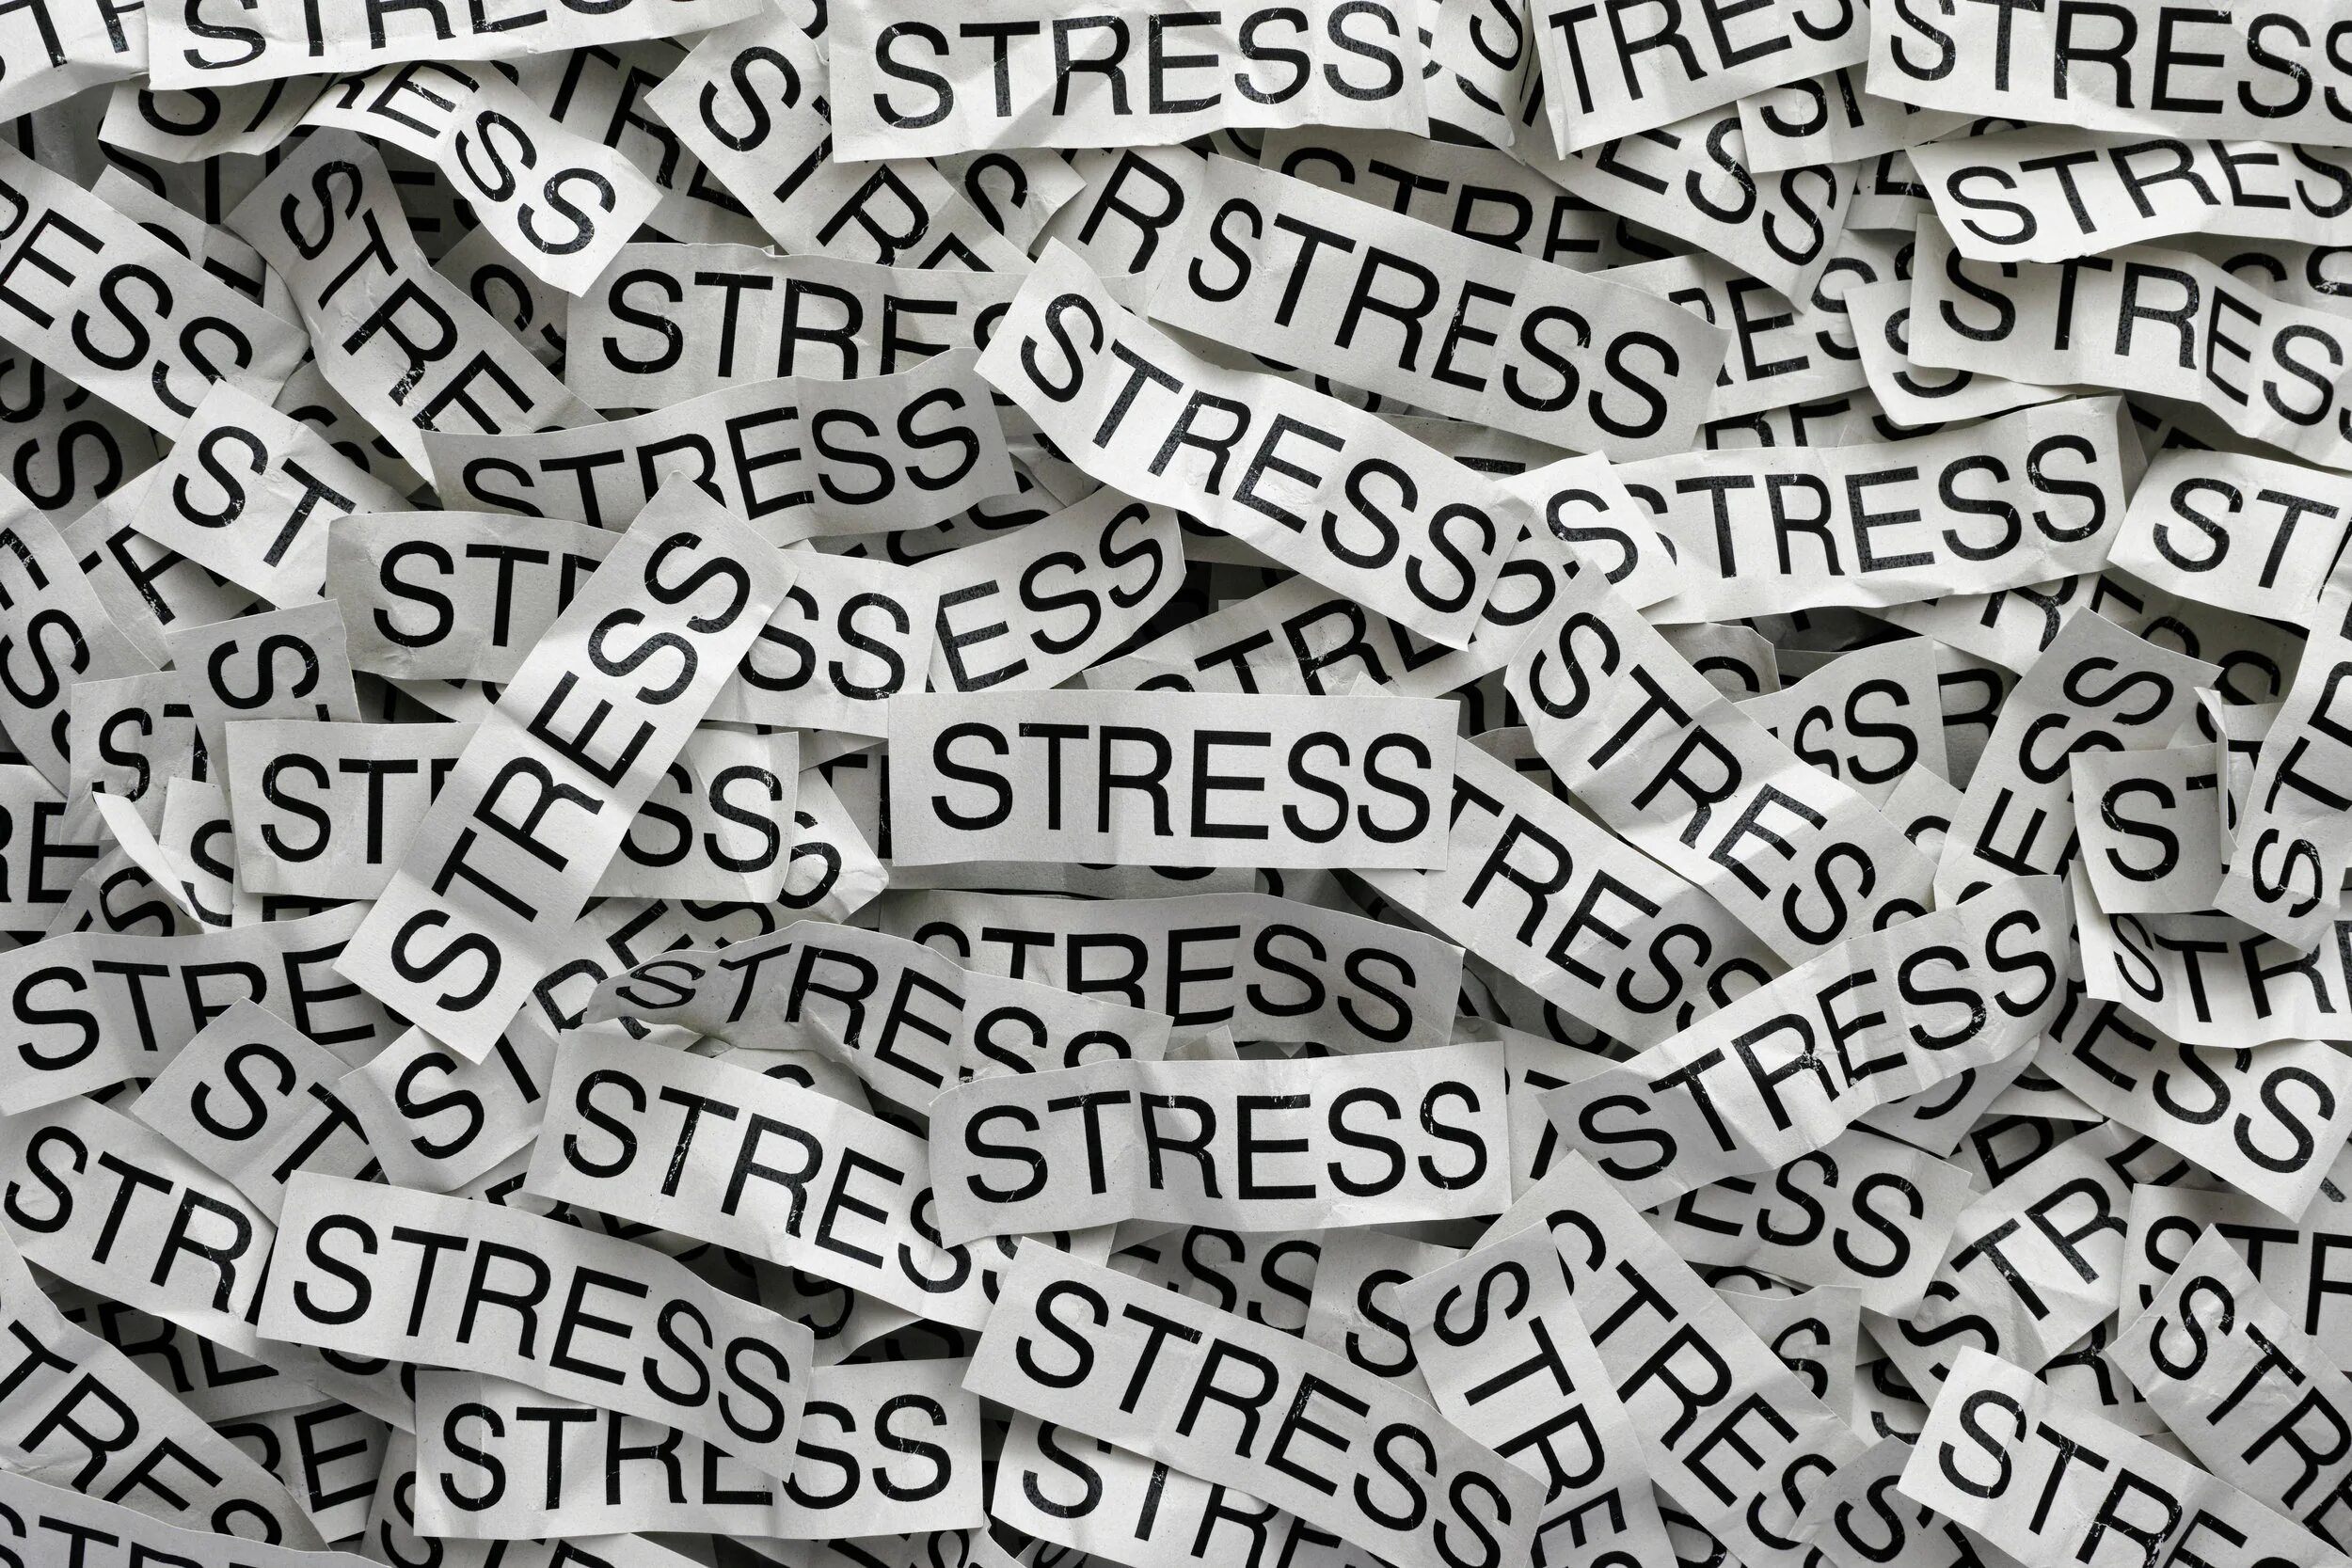 Stress text. Стресс слово. Stress надпись. Стресс баннер. Картинка со словом стресс.